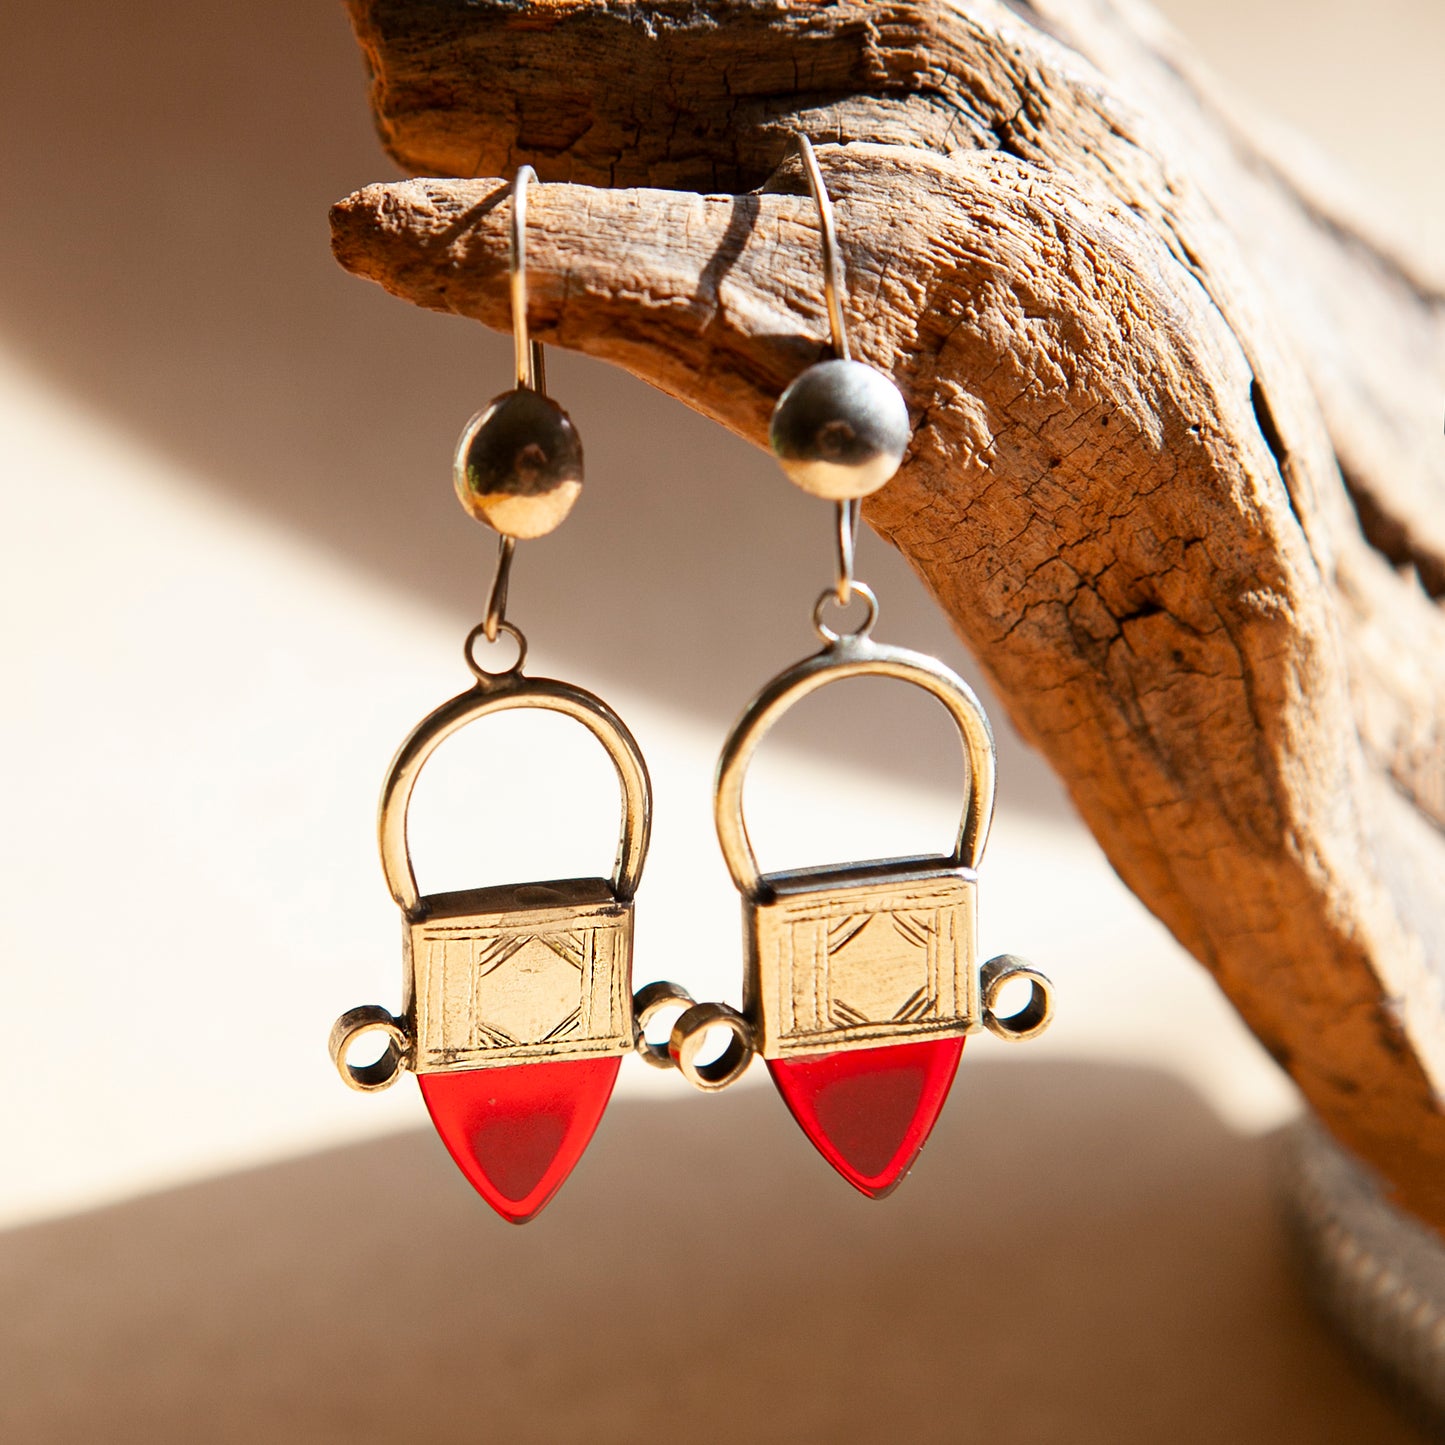 Tuareg Silver & Glass Drop Earrings - Red